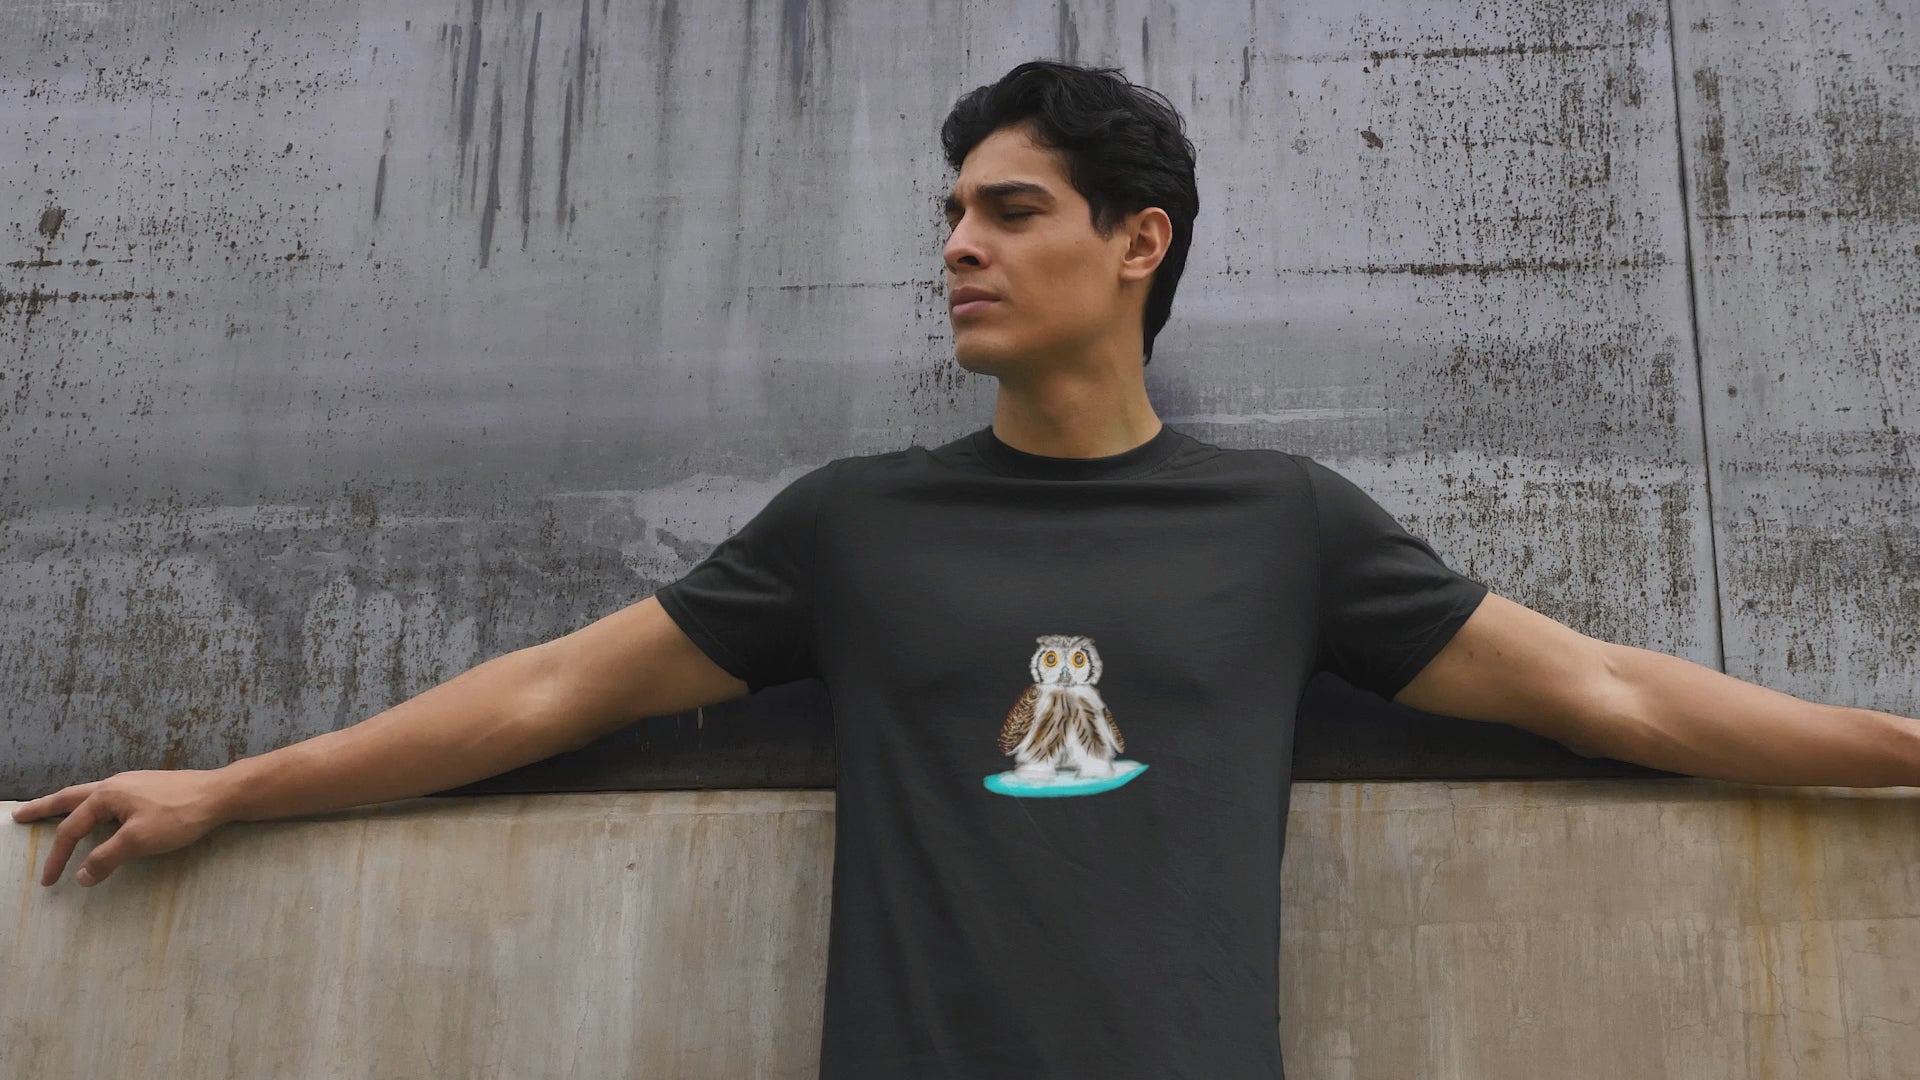 Owl Surfing | 100% Organic Cotton T Shirt worn by man